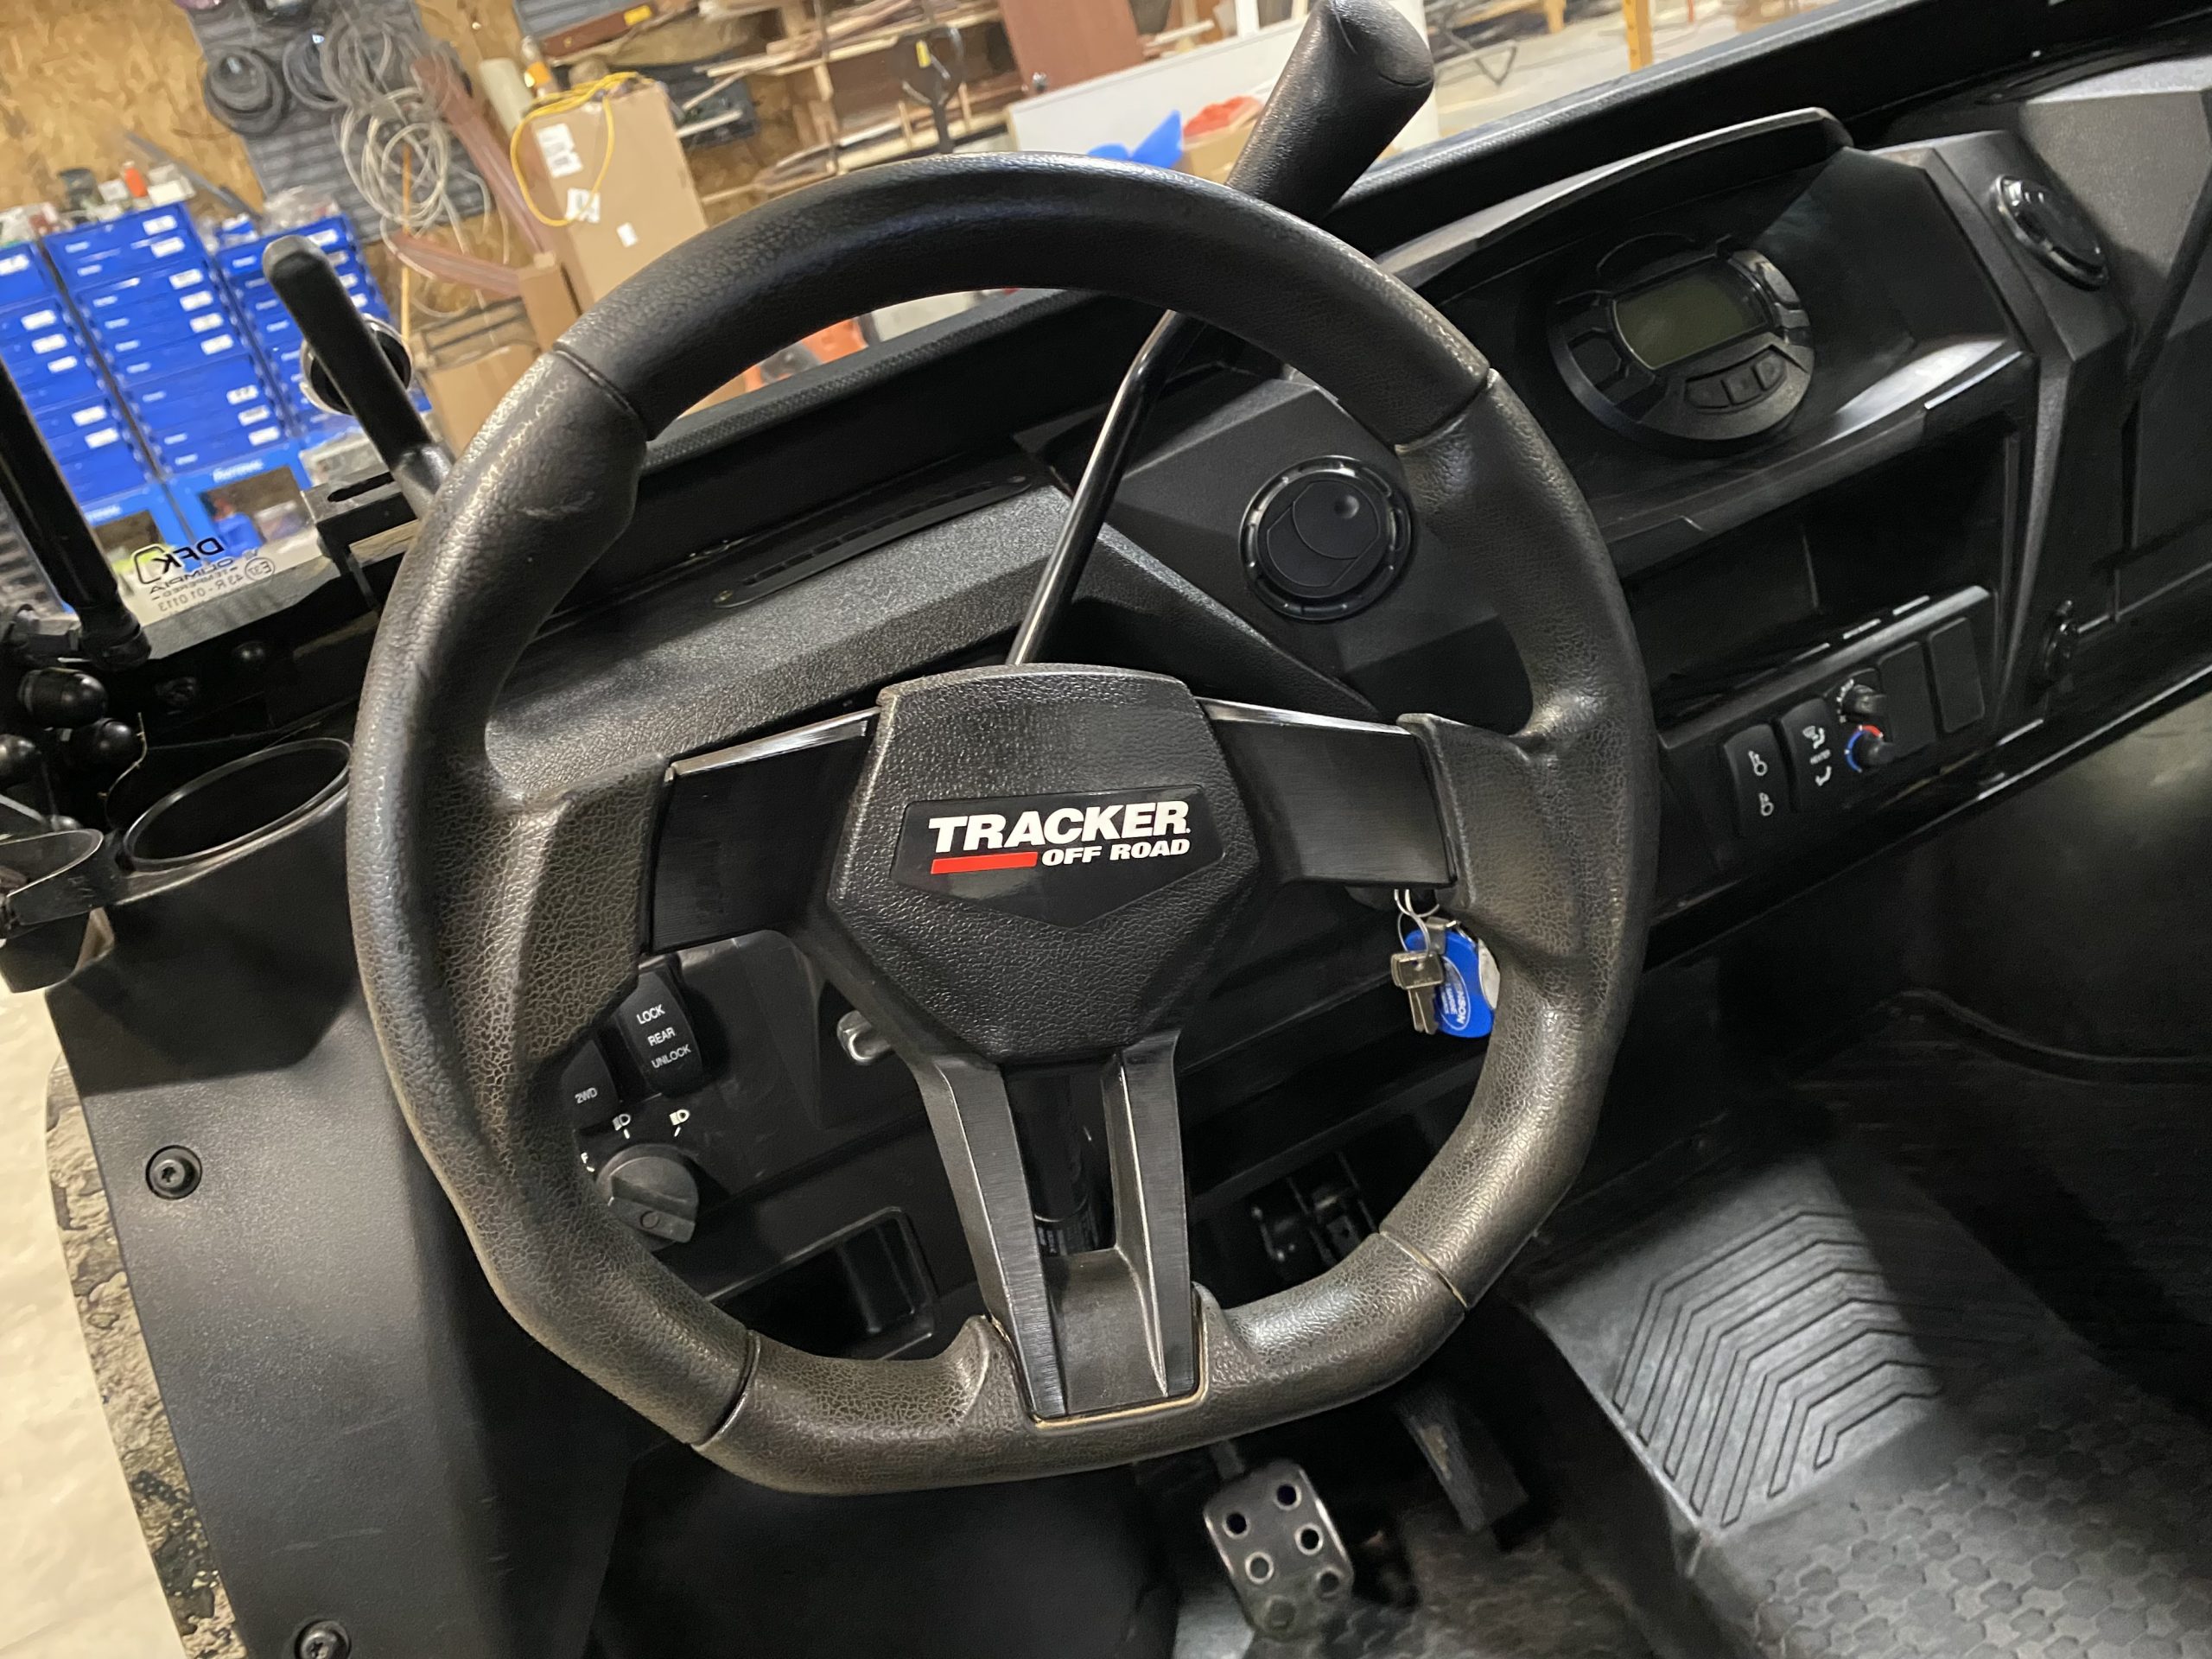 2021 Tracker OFF ROAD 800SX, hard cab, heat! Now $16,900! - Swenson RV ...